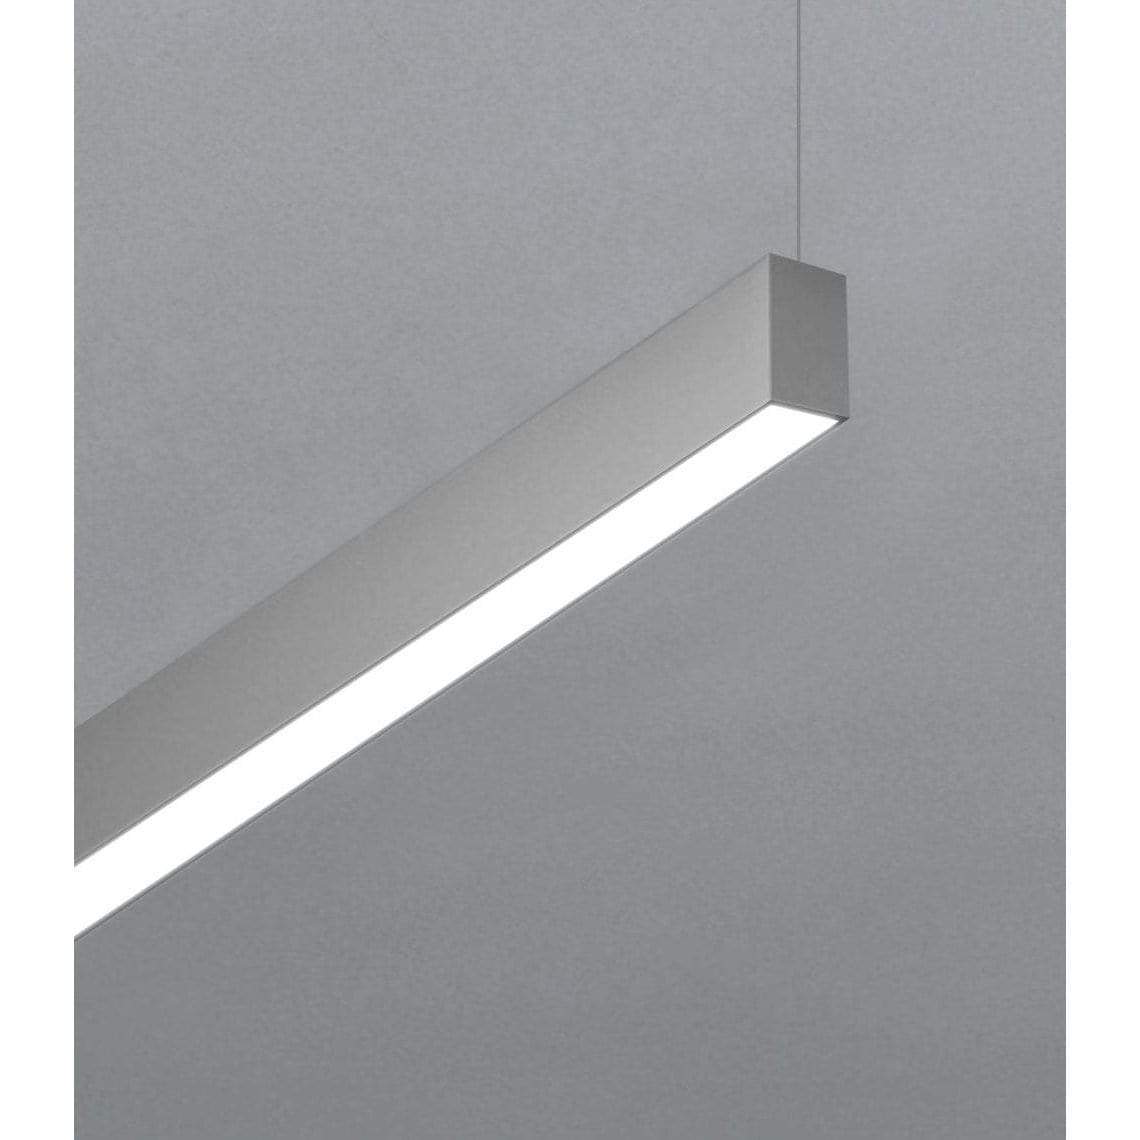 POE Texas Lighting Denton Suspended Linear PoE Lights - Sample 1.3" x 4' Linear Diffuser 4 ft, 3000K (Wall)